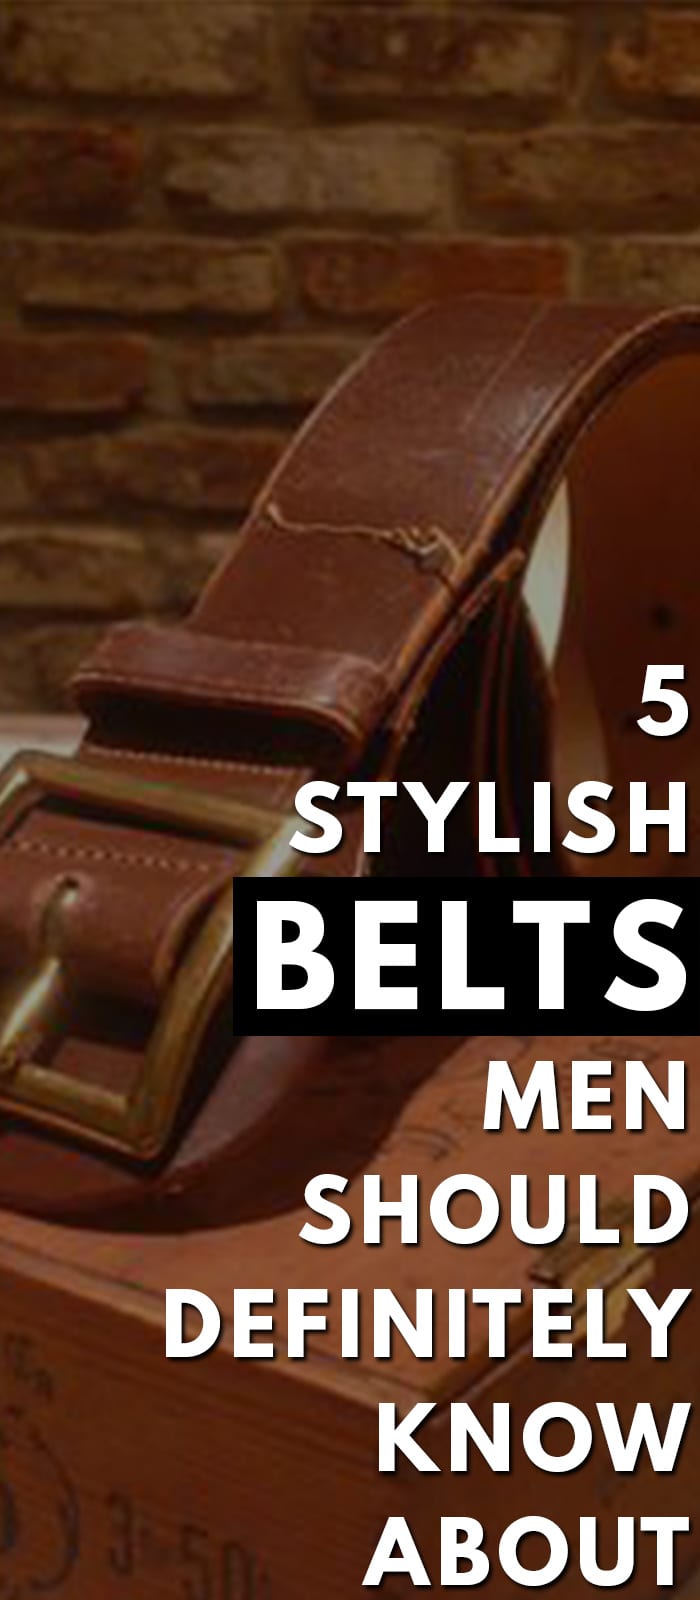 5 Stylish Belts Men Should Definitely Know